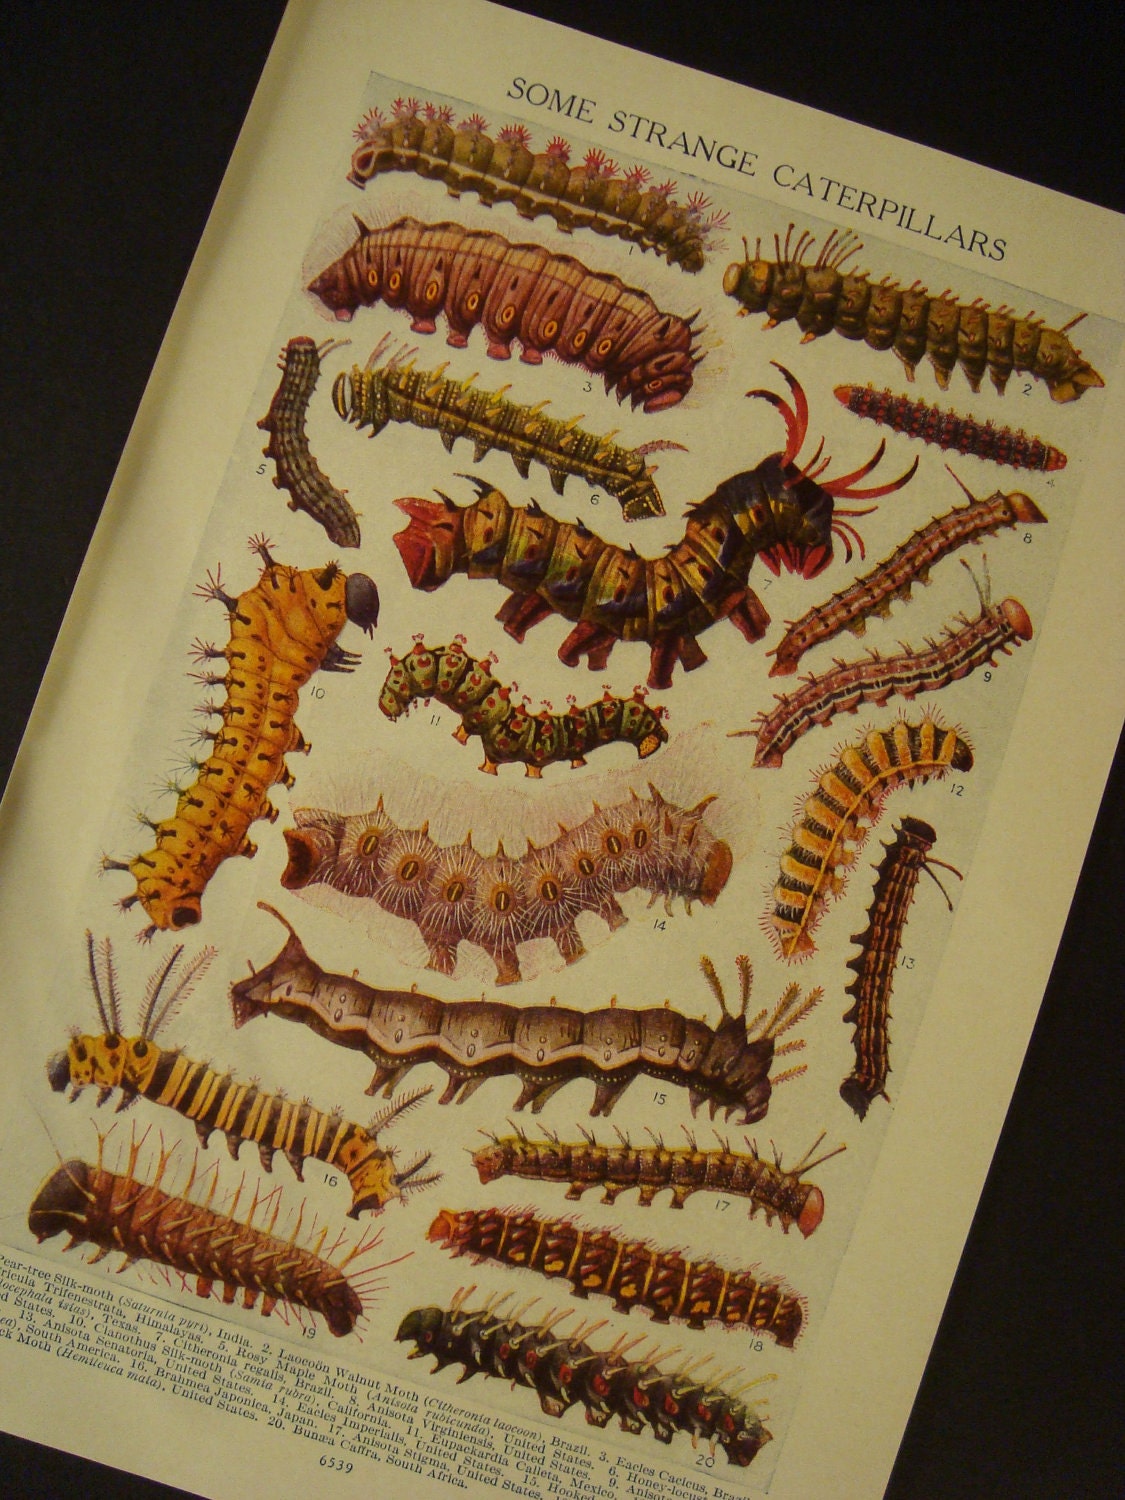 Strange Caterpillars Double Sided Antique Original Insect Print Number 589 - iowajewel